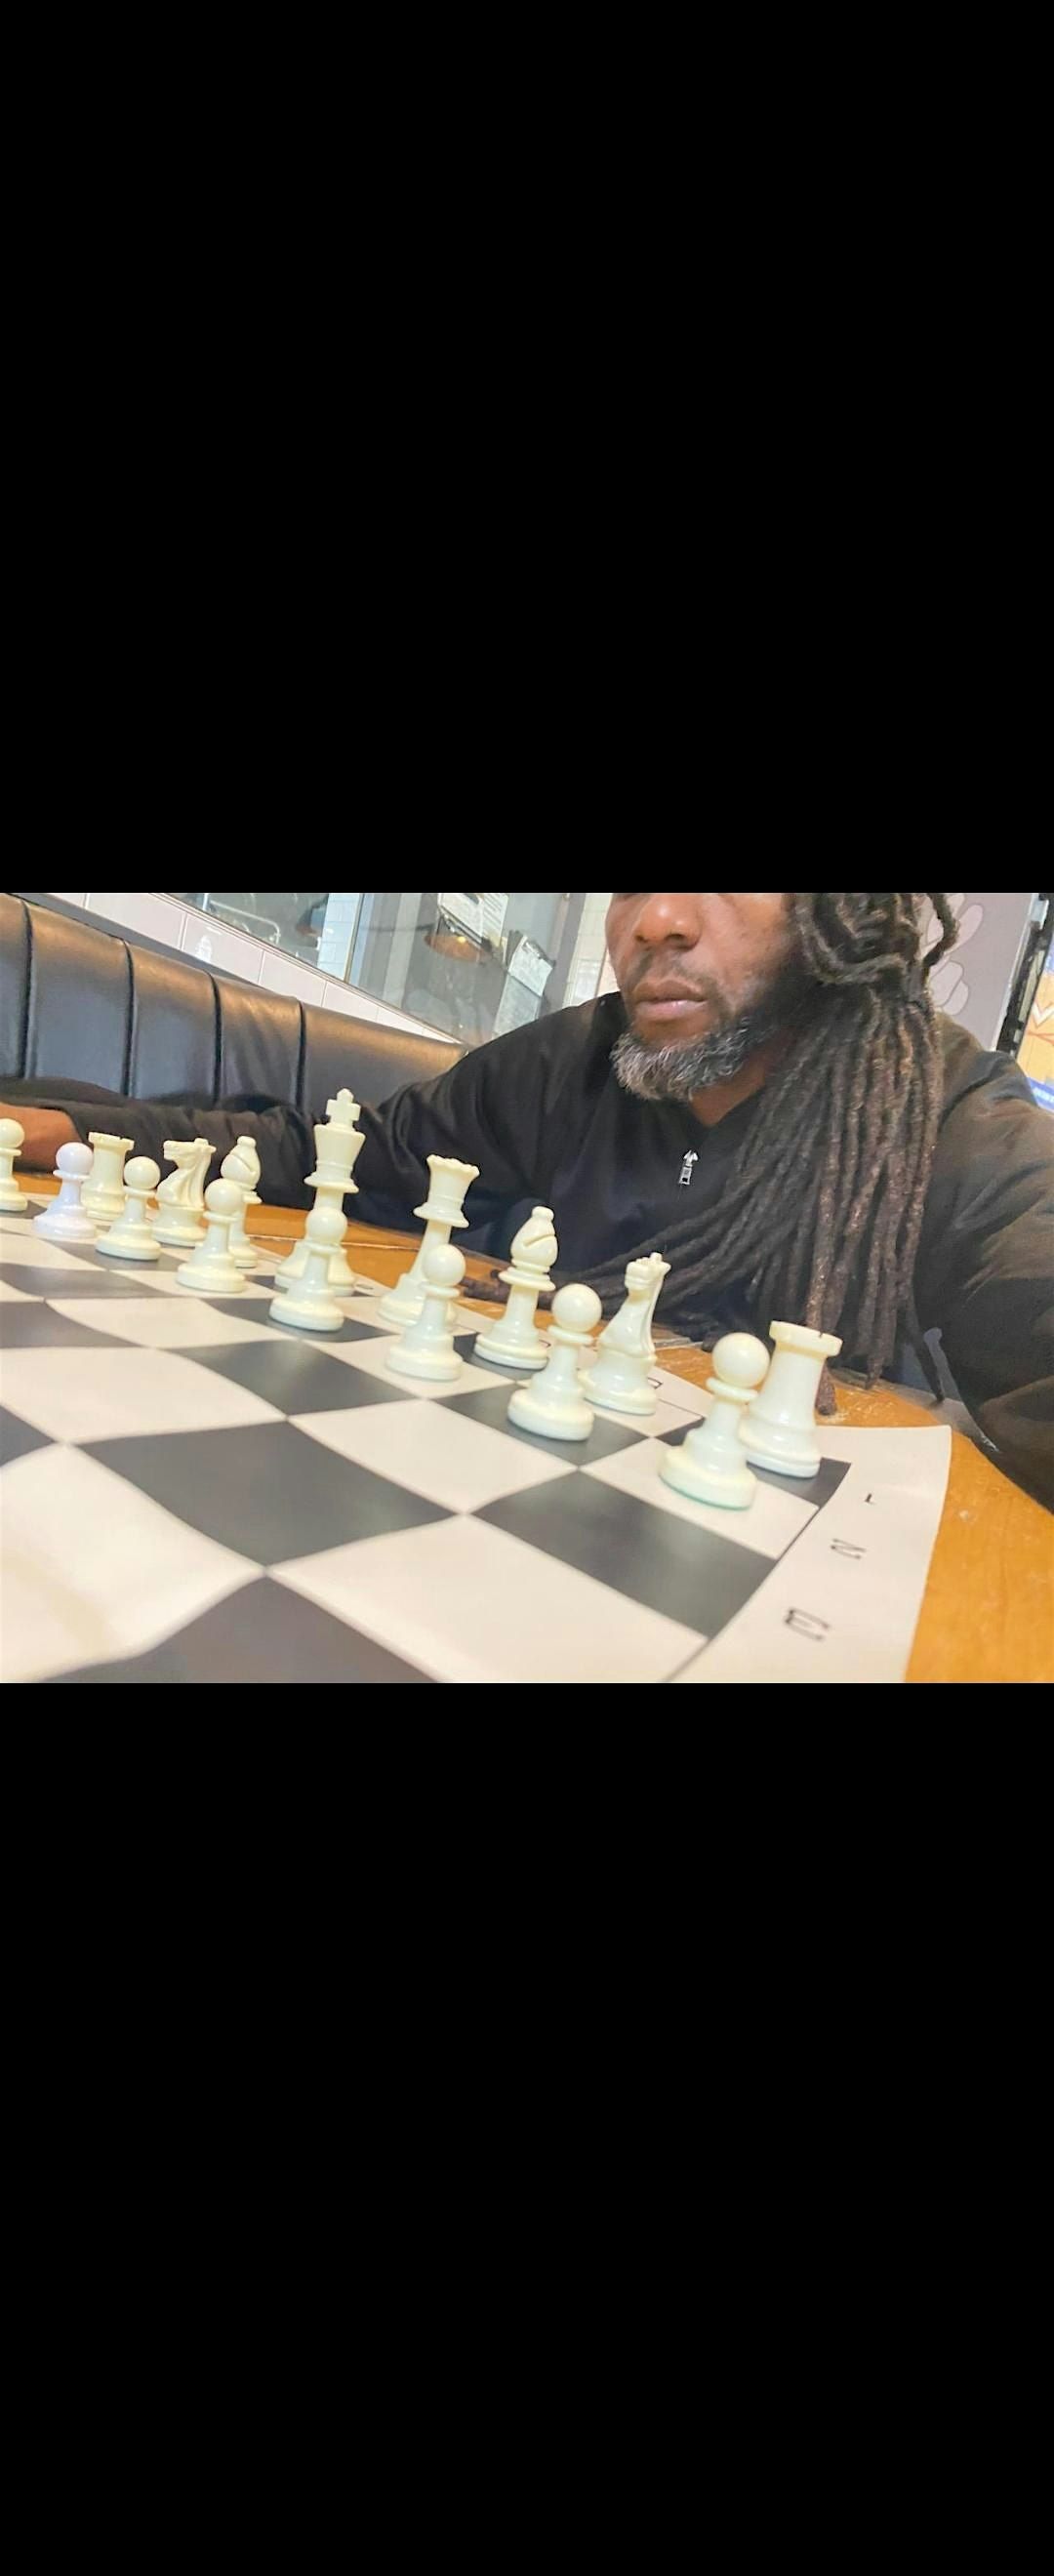 Game of Chess w\/Killsboro Chess Club at Tappen Park